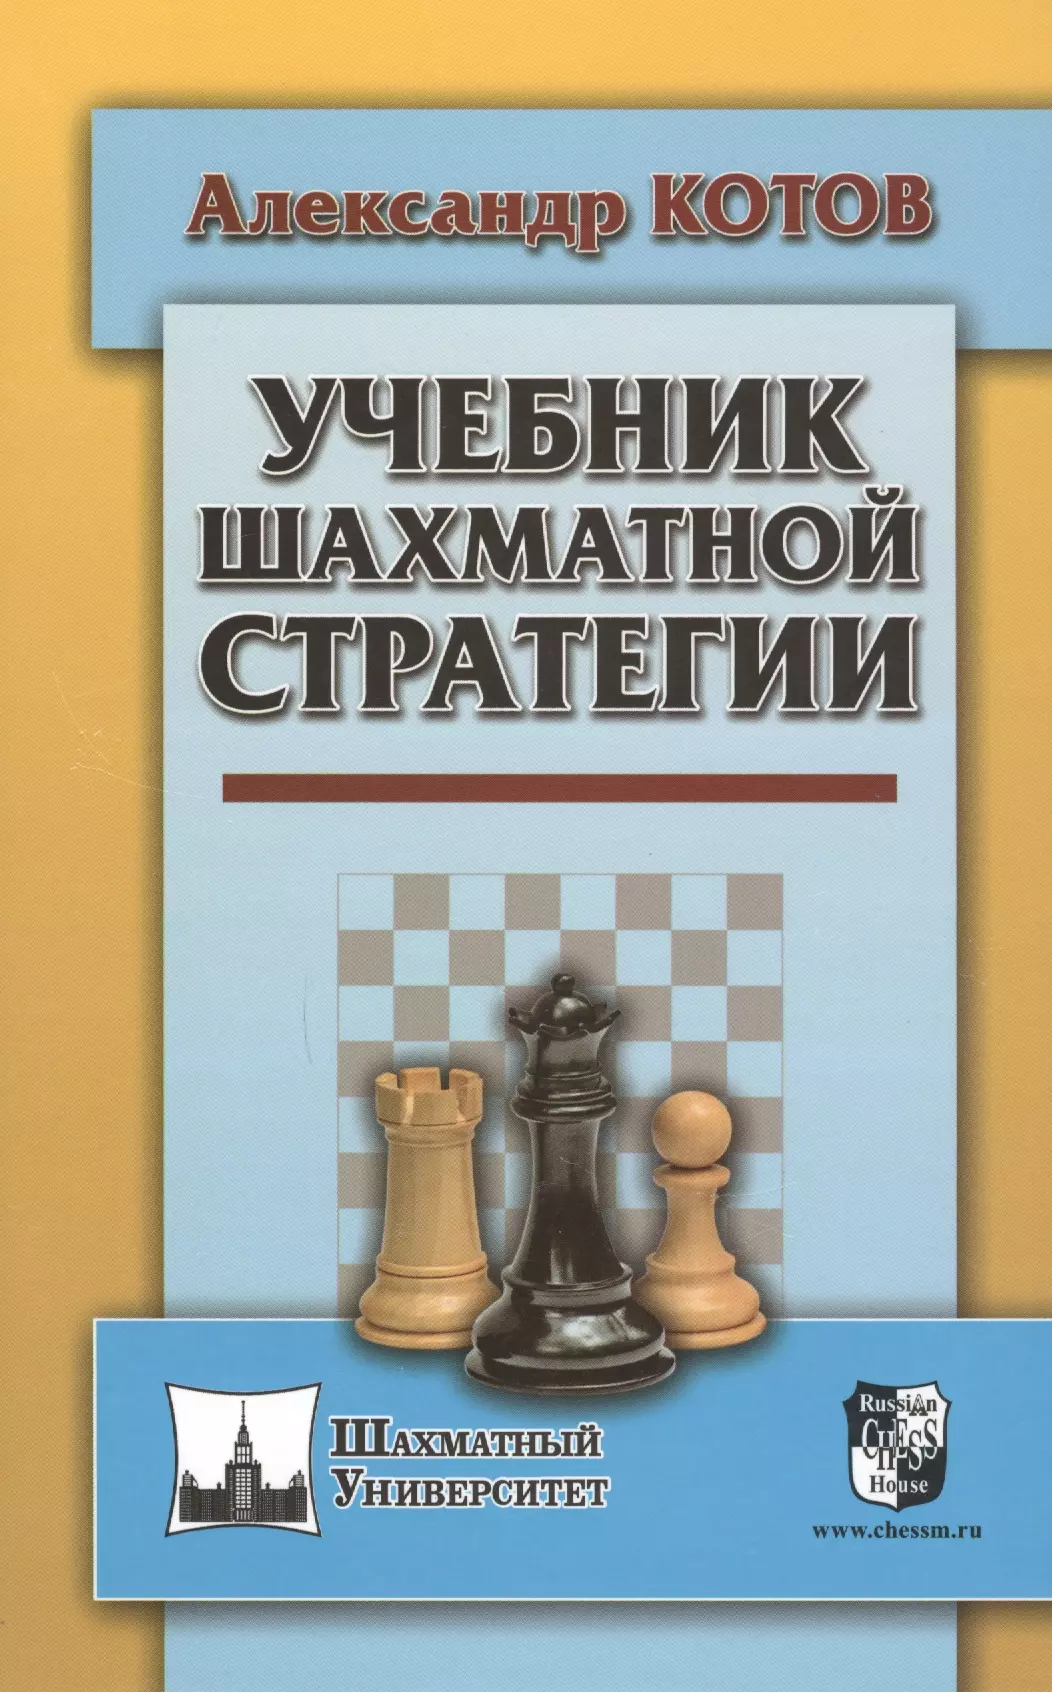 Котов Александр Александрович - Учебник шахматной стратегии